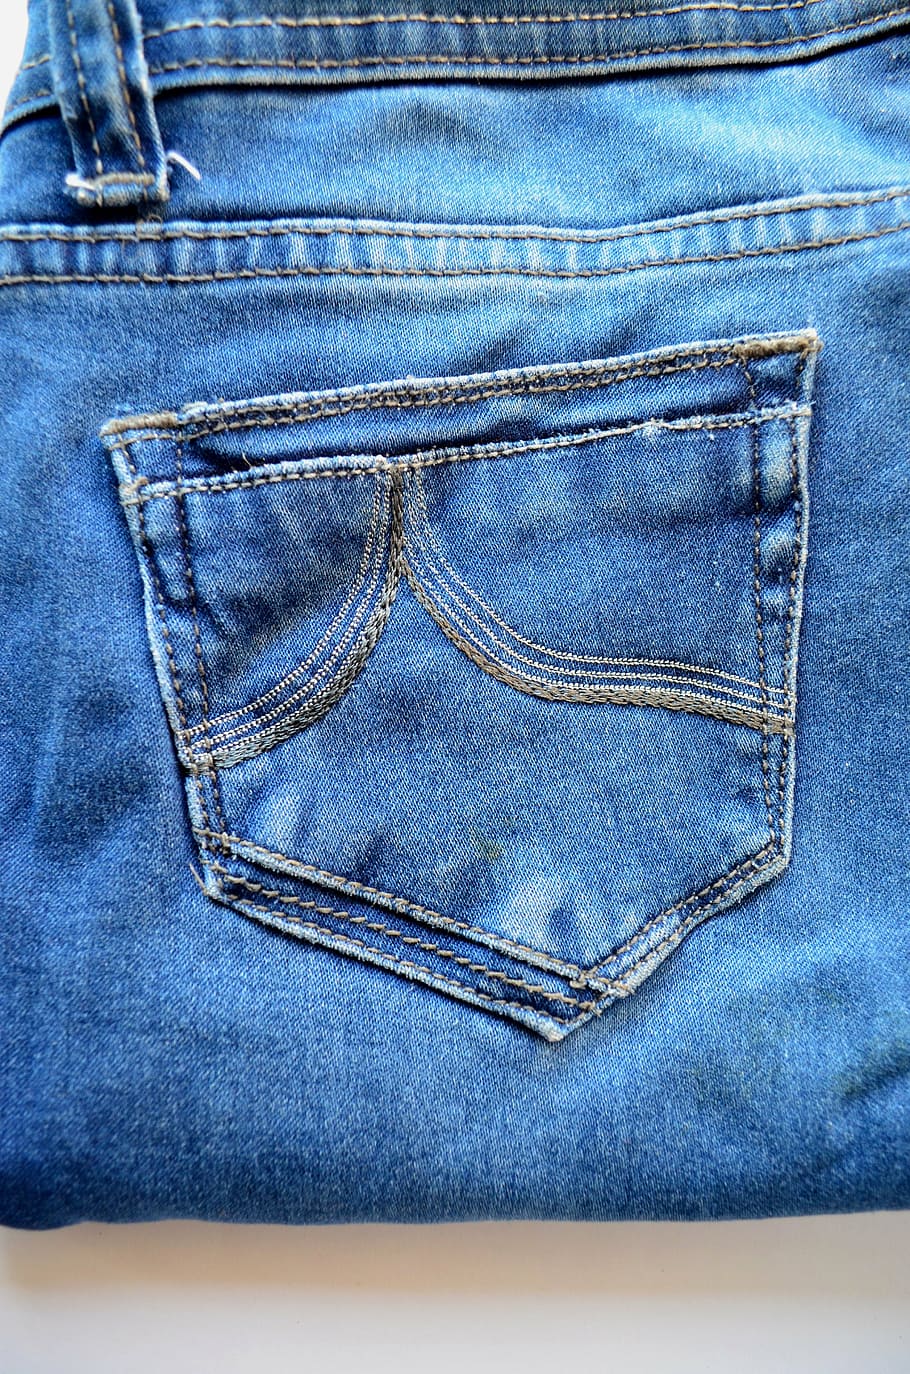 blue jeans, jeans, blue, pocket, fashion, clothing, casual, denim, cotton, cloth